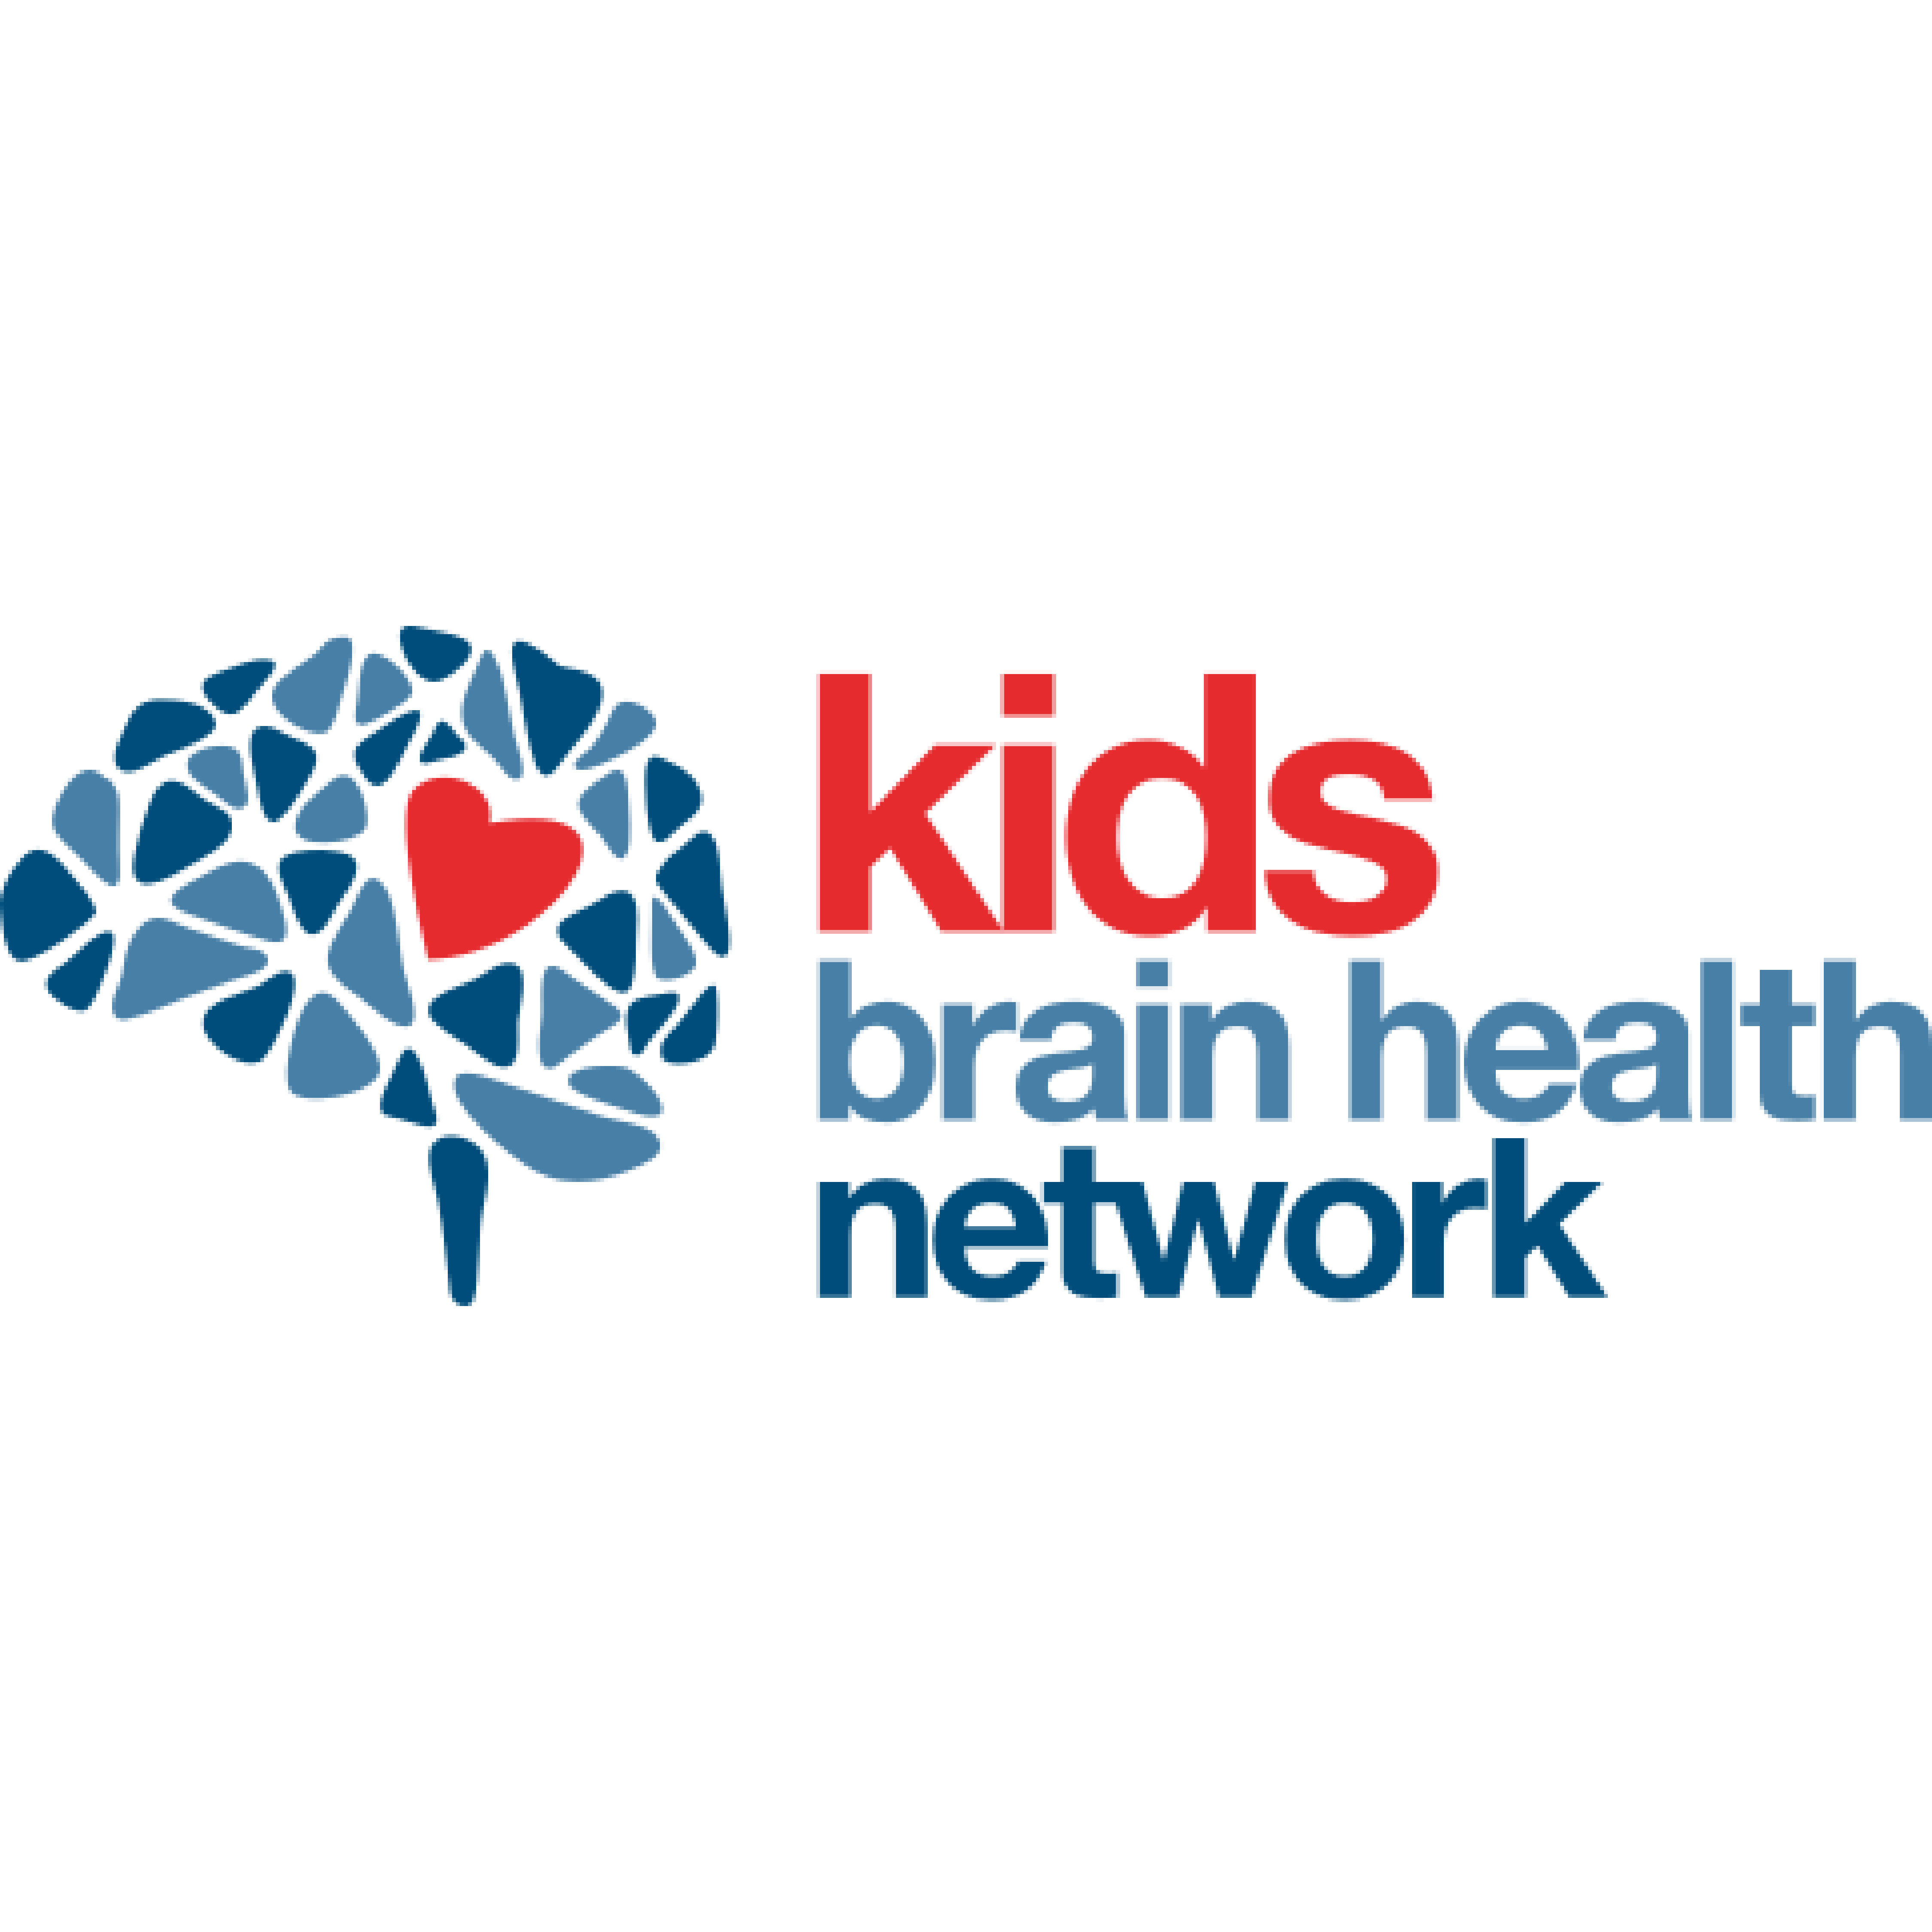 The kids brain health network logo.